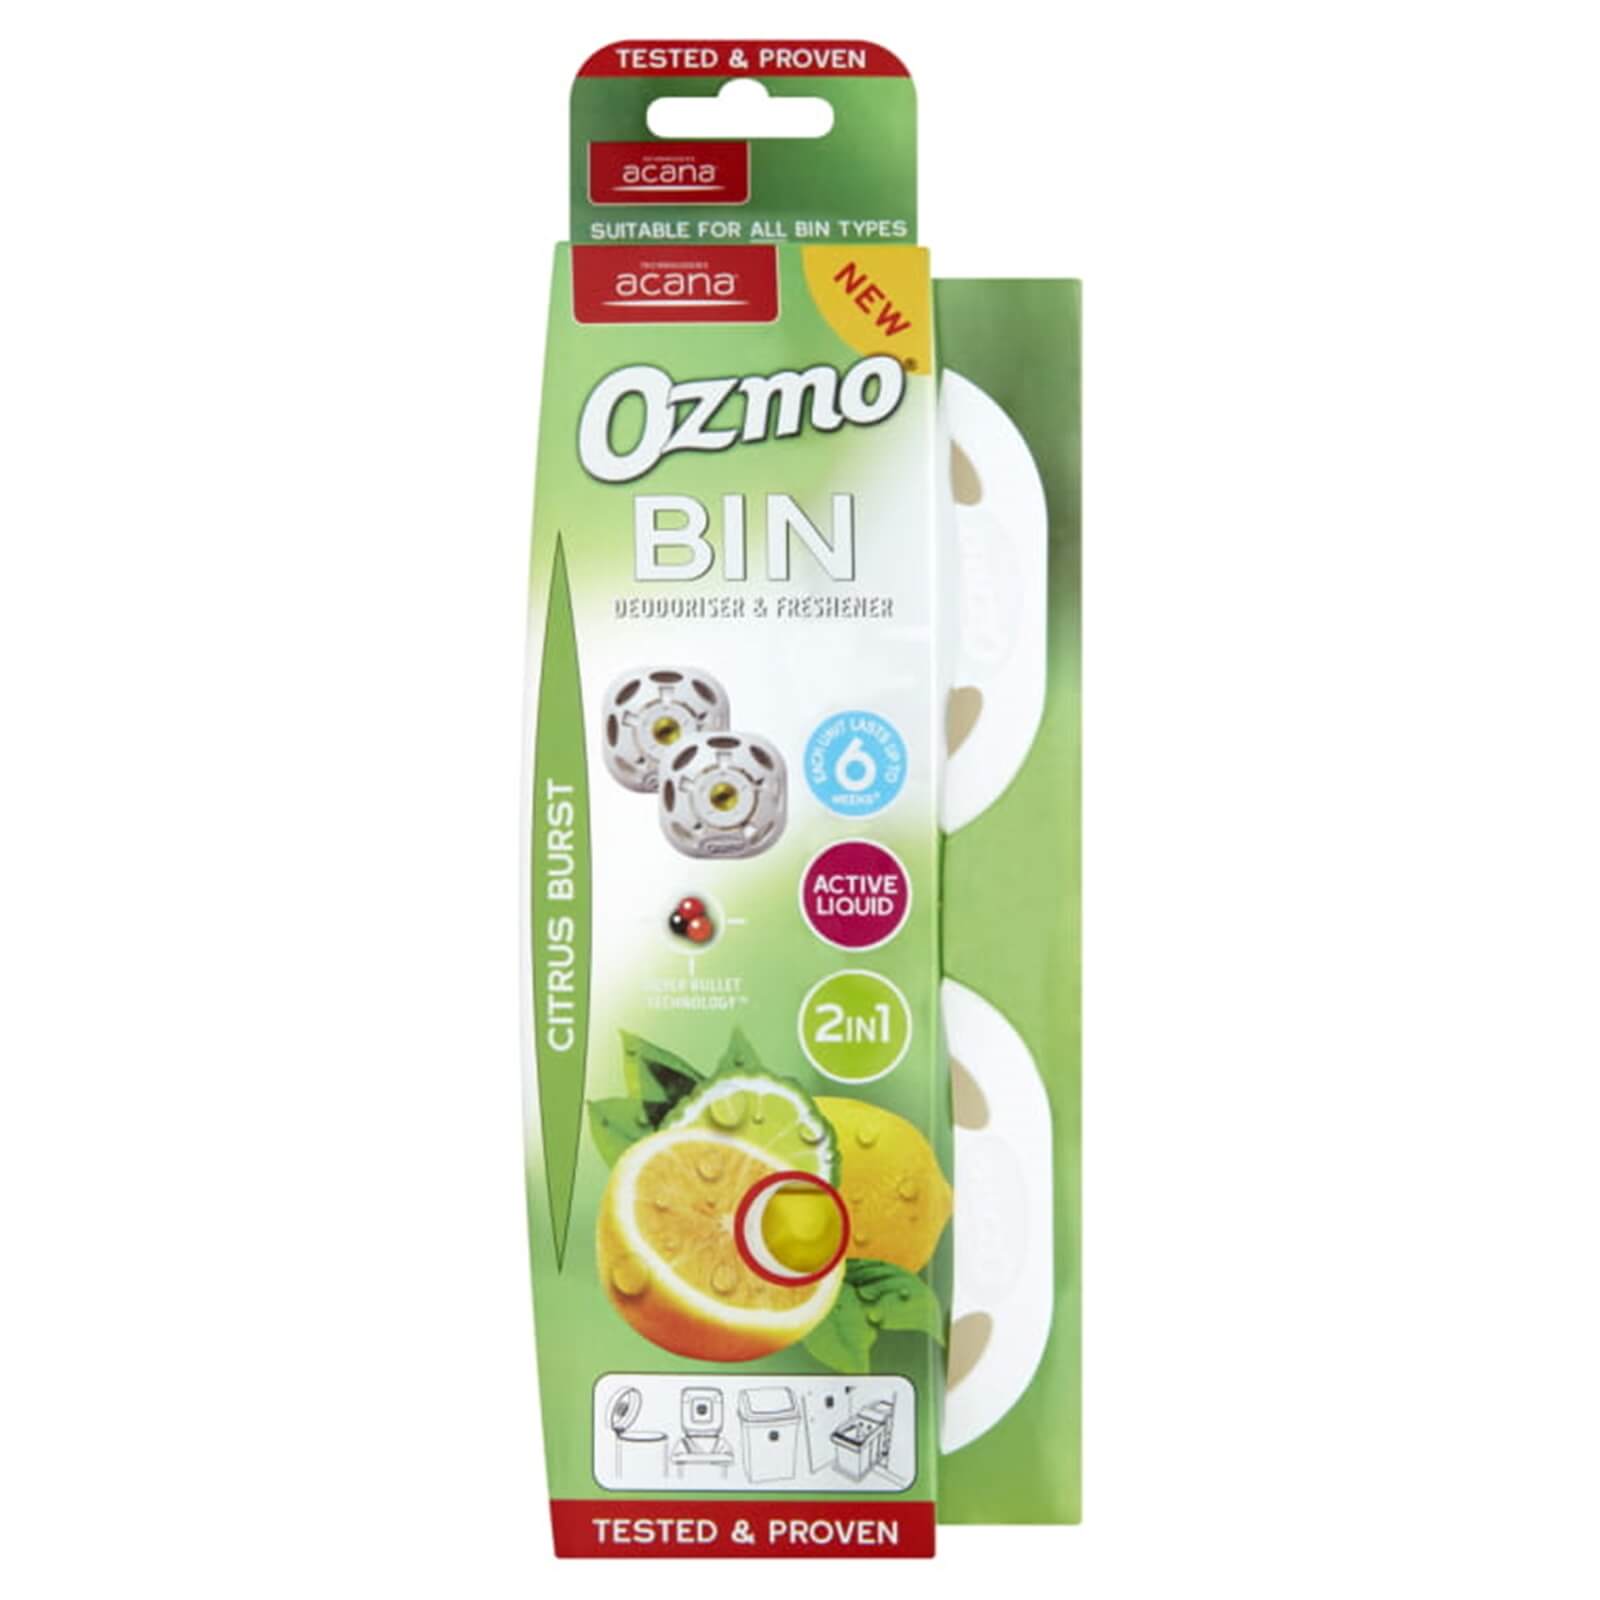 Ozmo Bin Deodoriser & Freshener